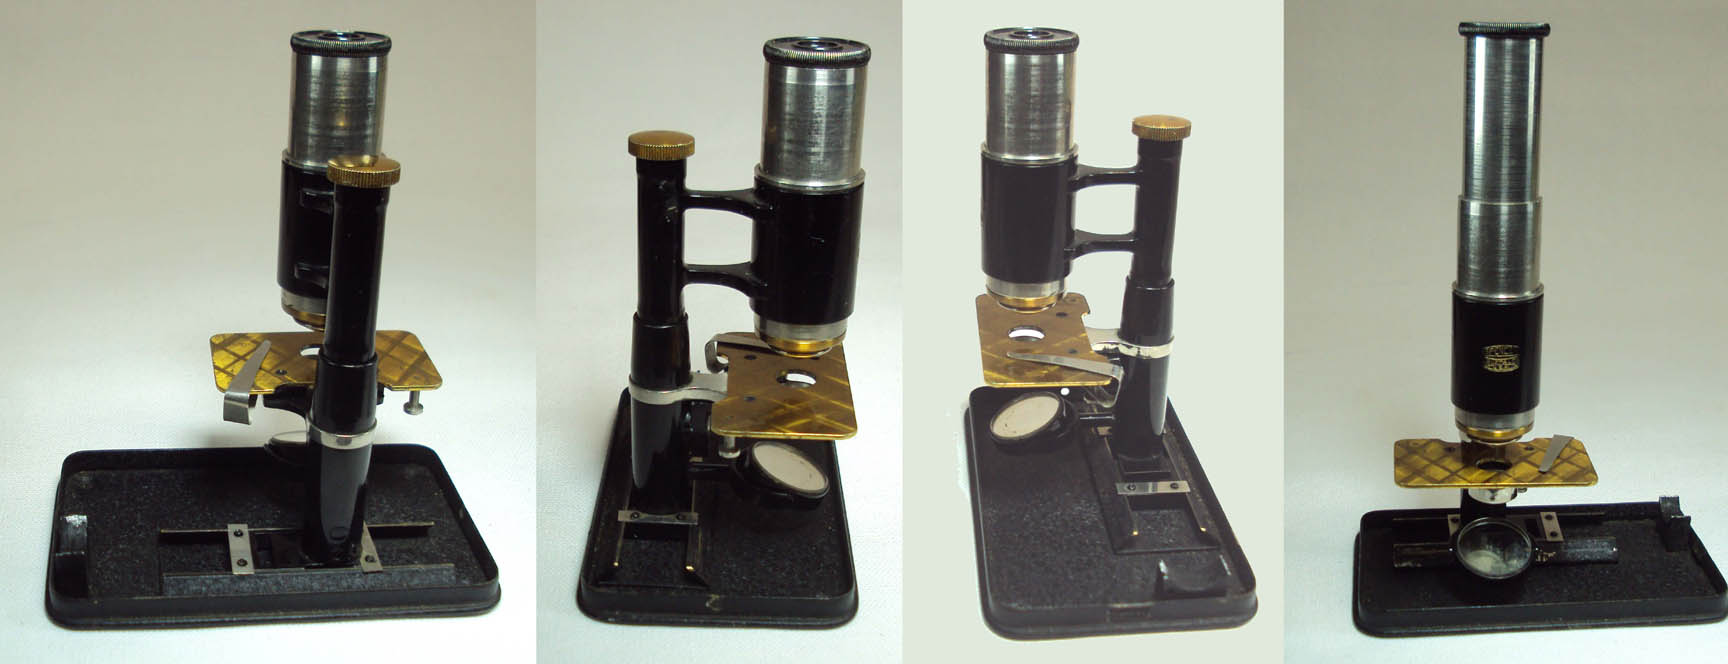 Spencer No 75 pocket microscope